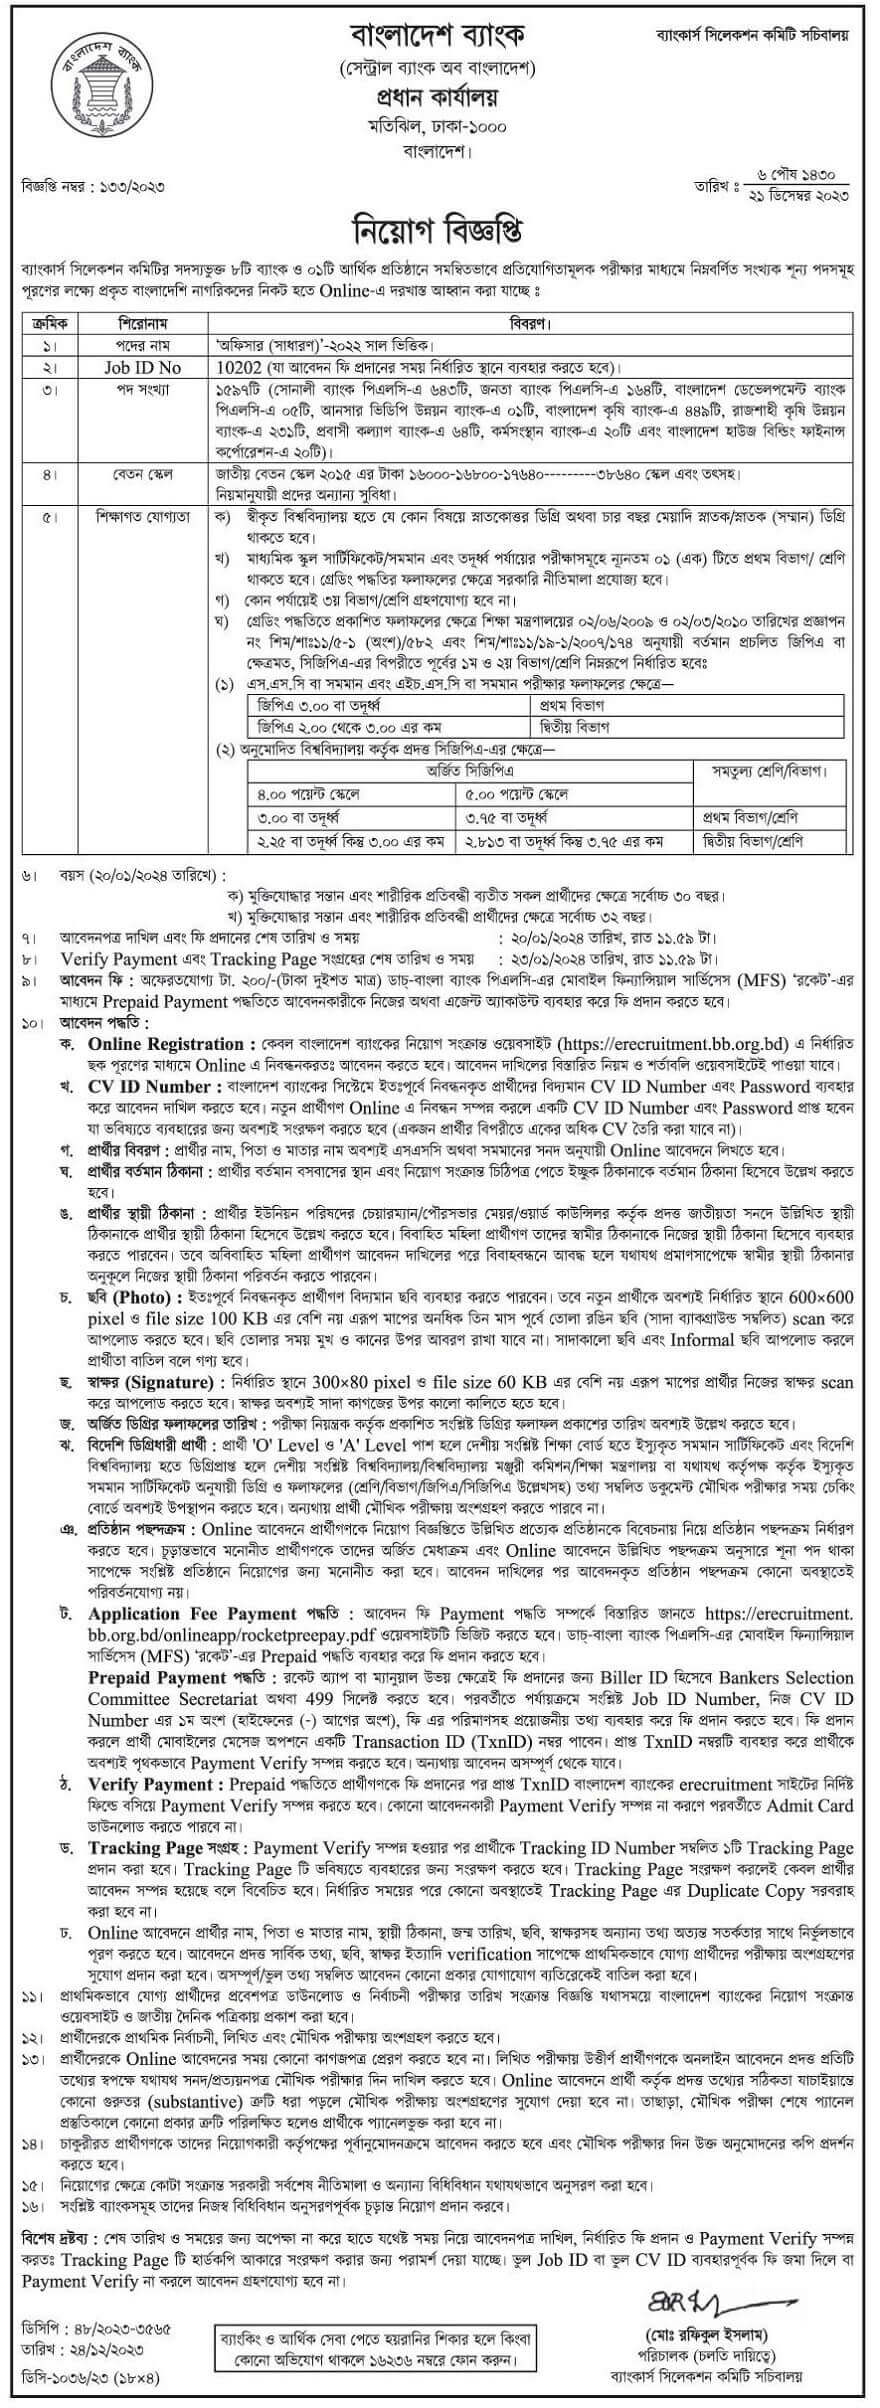 bangladesh krishi bank job circular